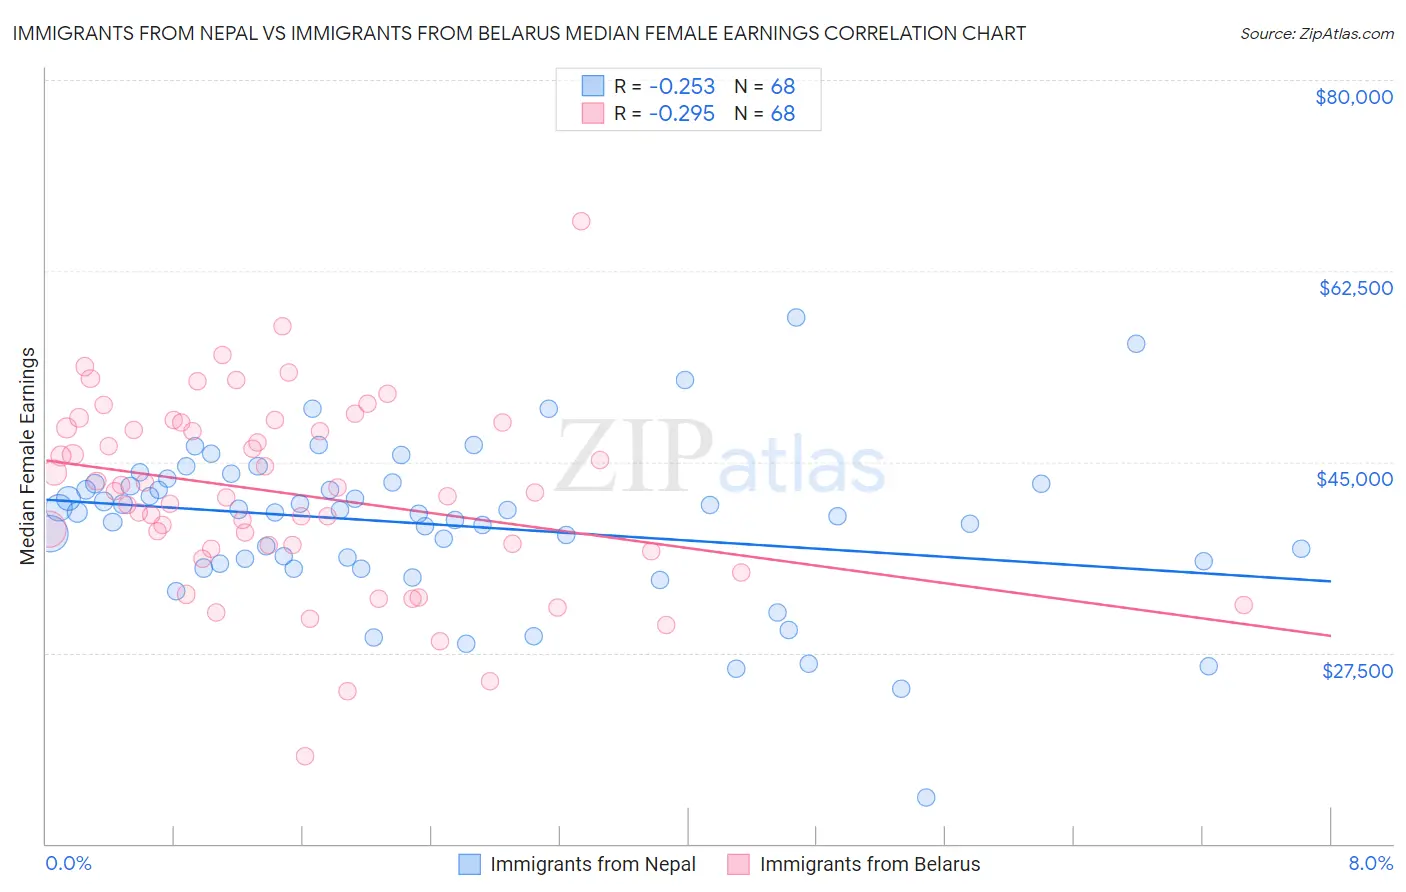 Immigrants from Nepal vs Immigrants from Belarus Median Female Earnings